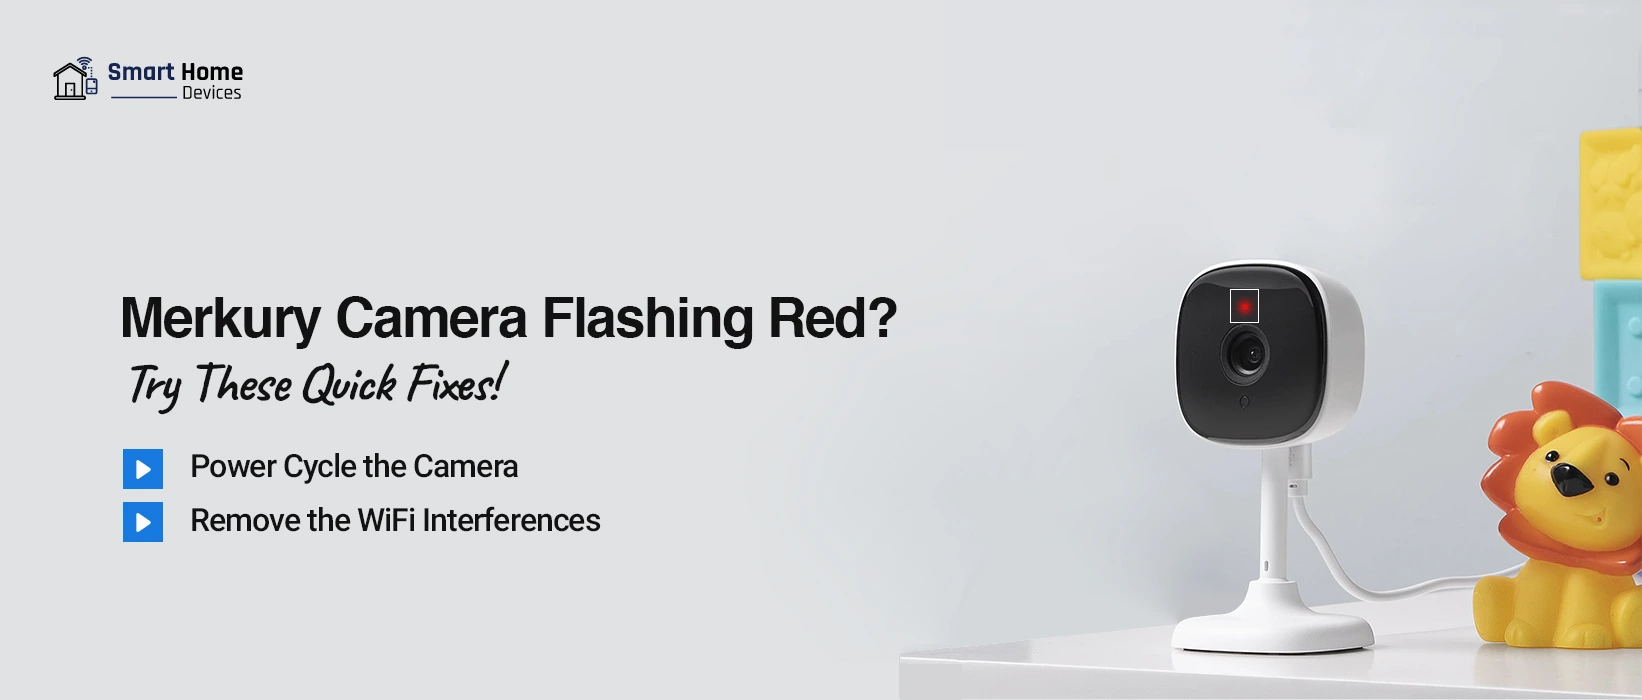 Merkury Camera Flashing Red How To Fix It